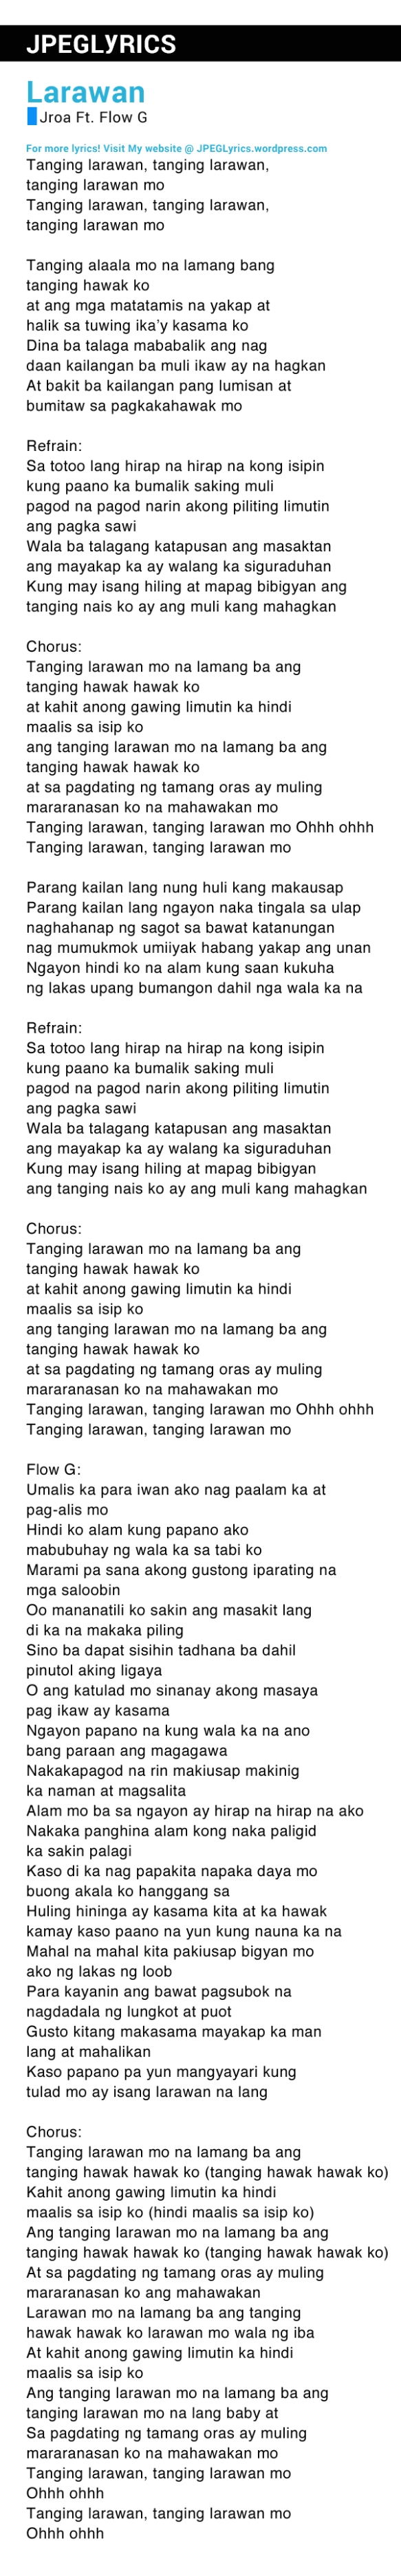 Flow G Jpeg Lyrics